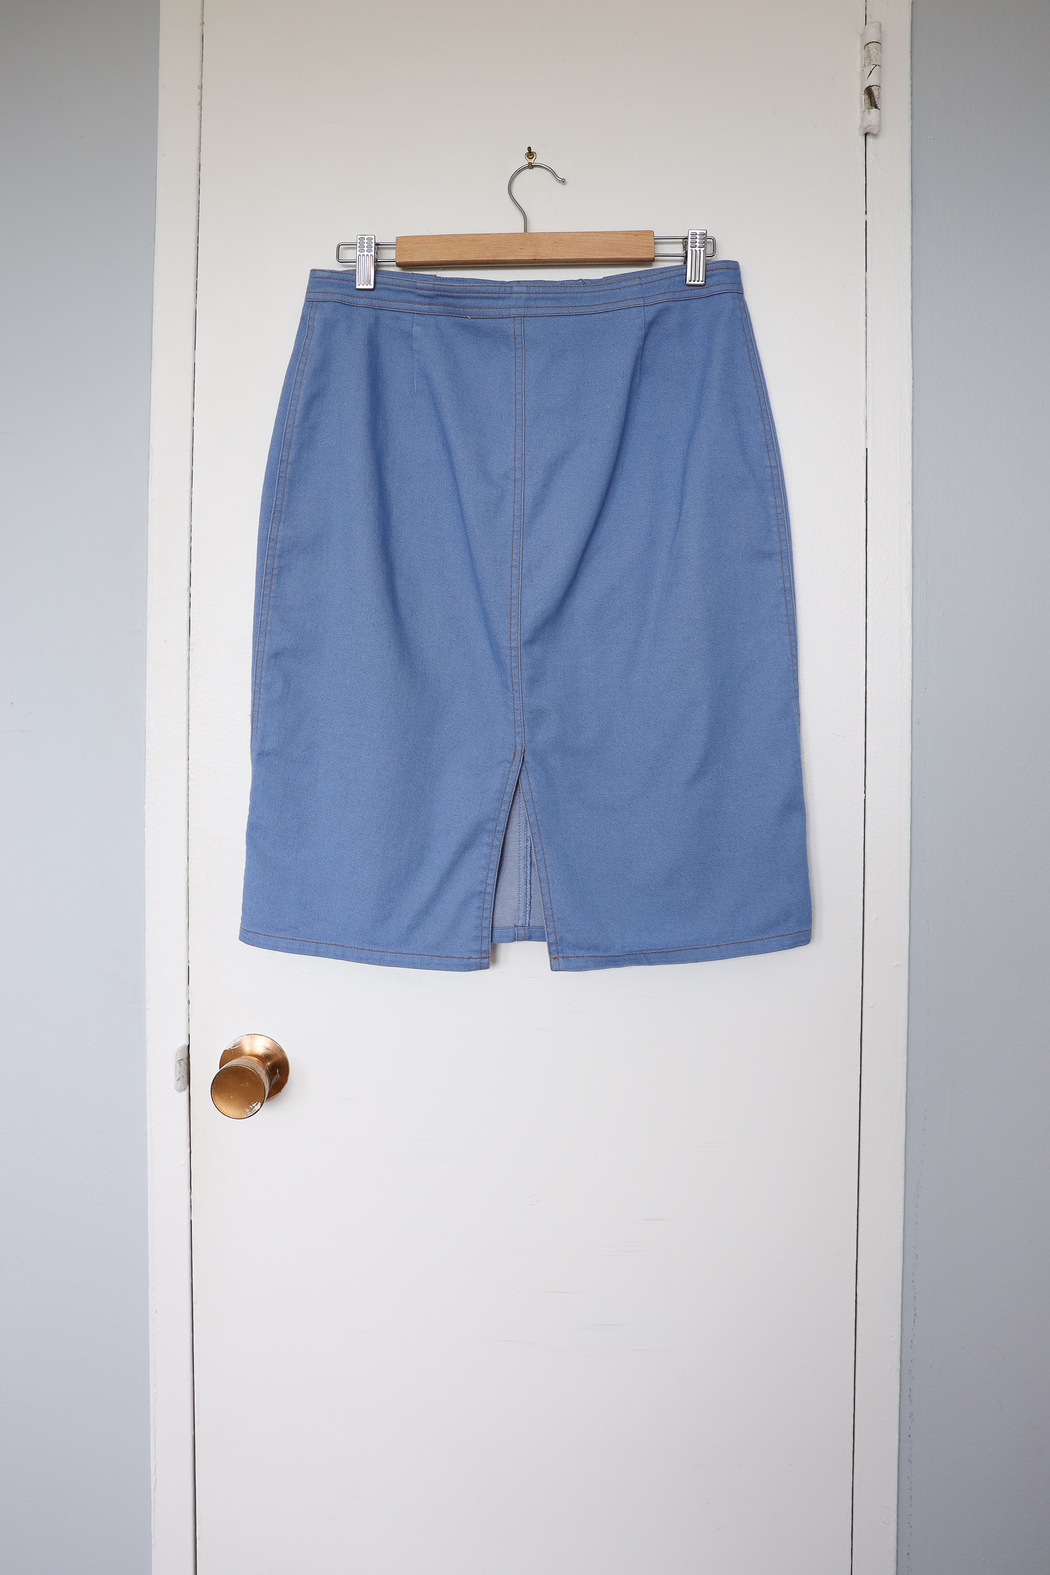 Cornflower Blue Pencil Skirt / Size 8